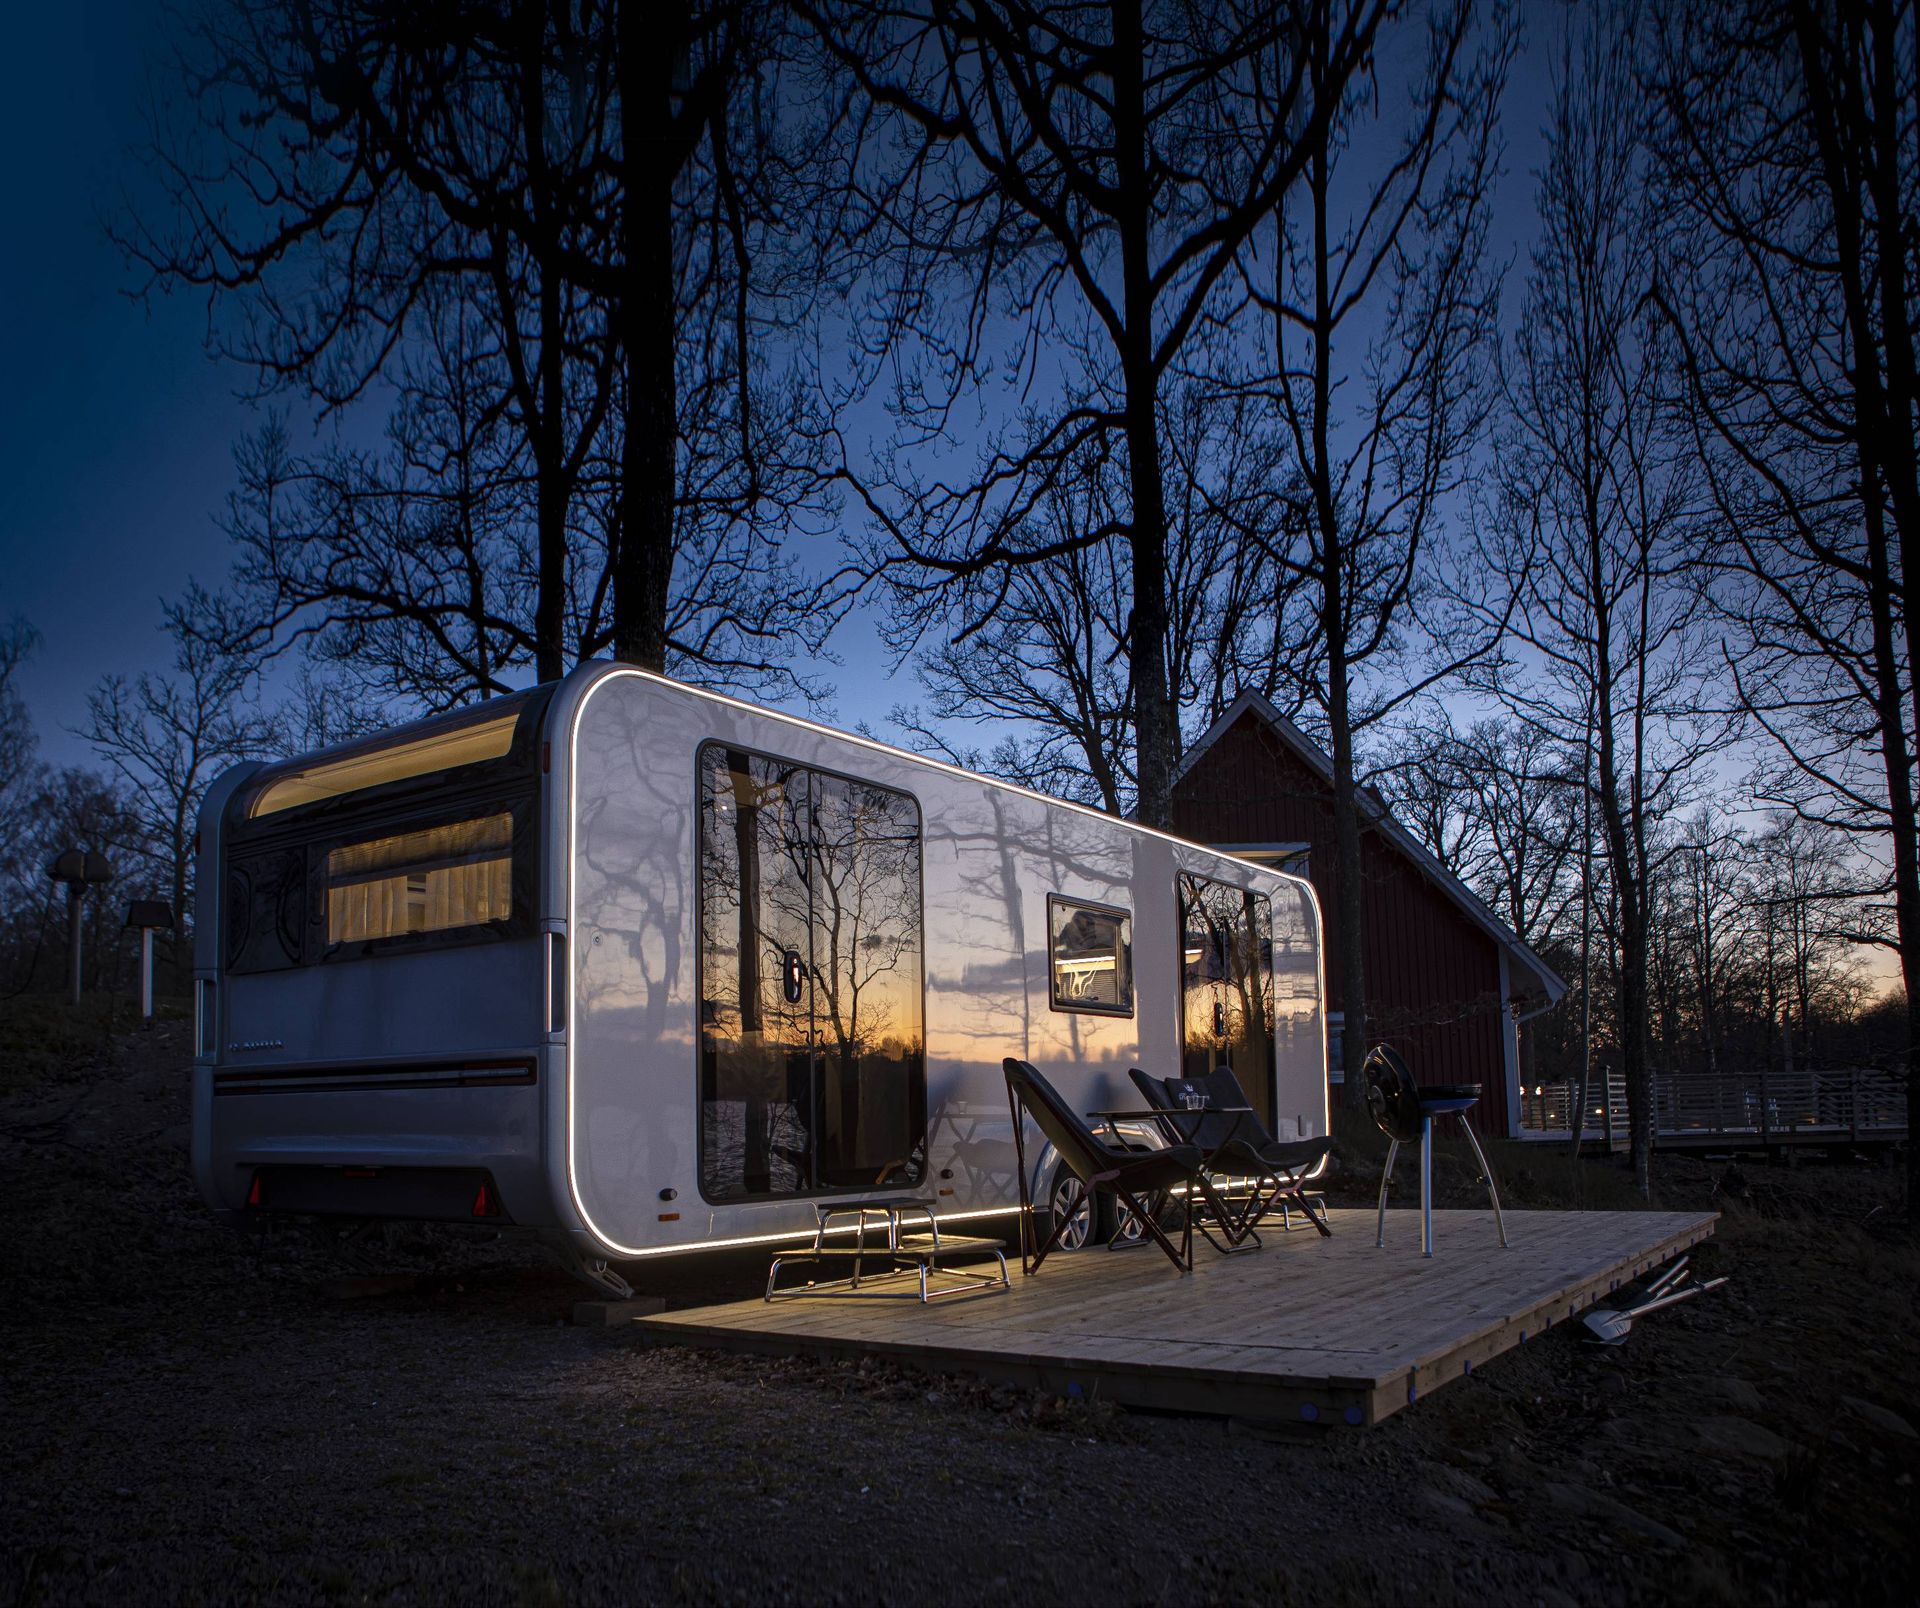 Adria Astella - caravan or already a cottage? – main image